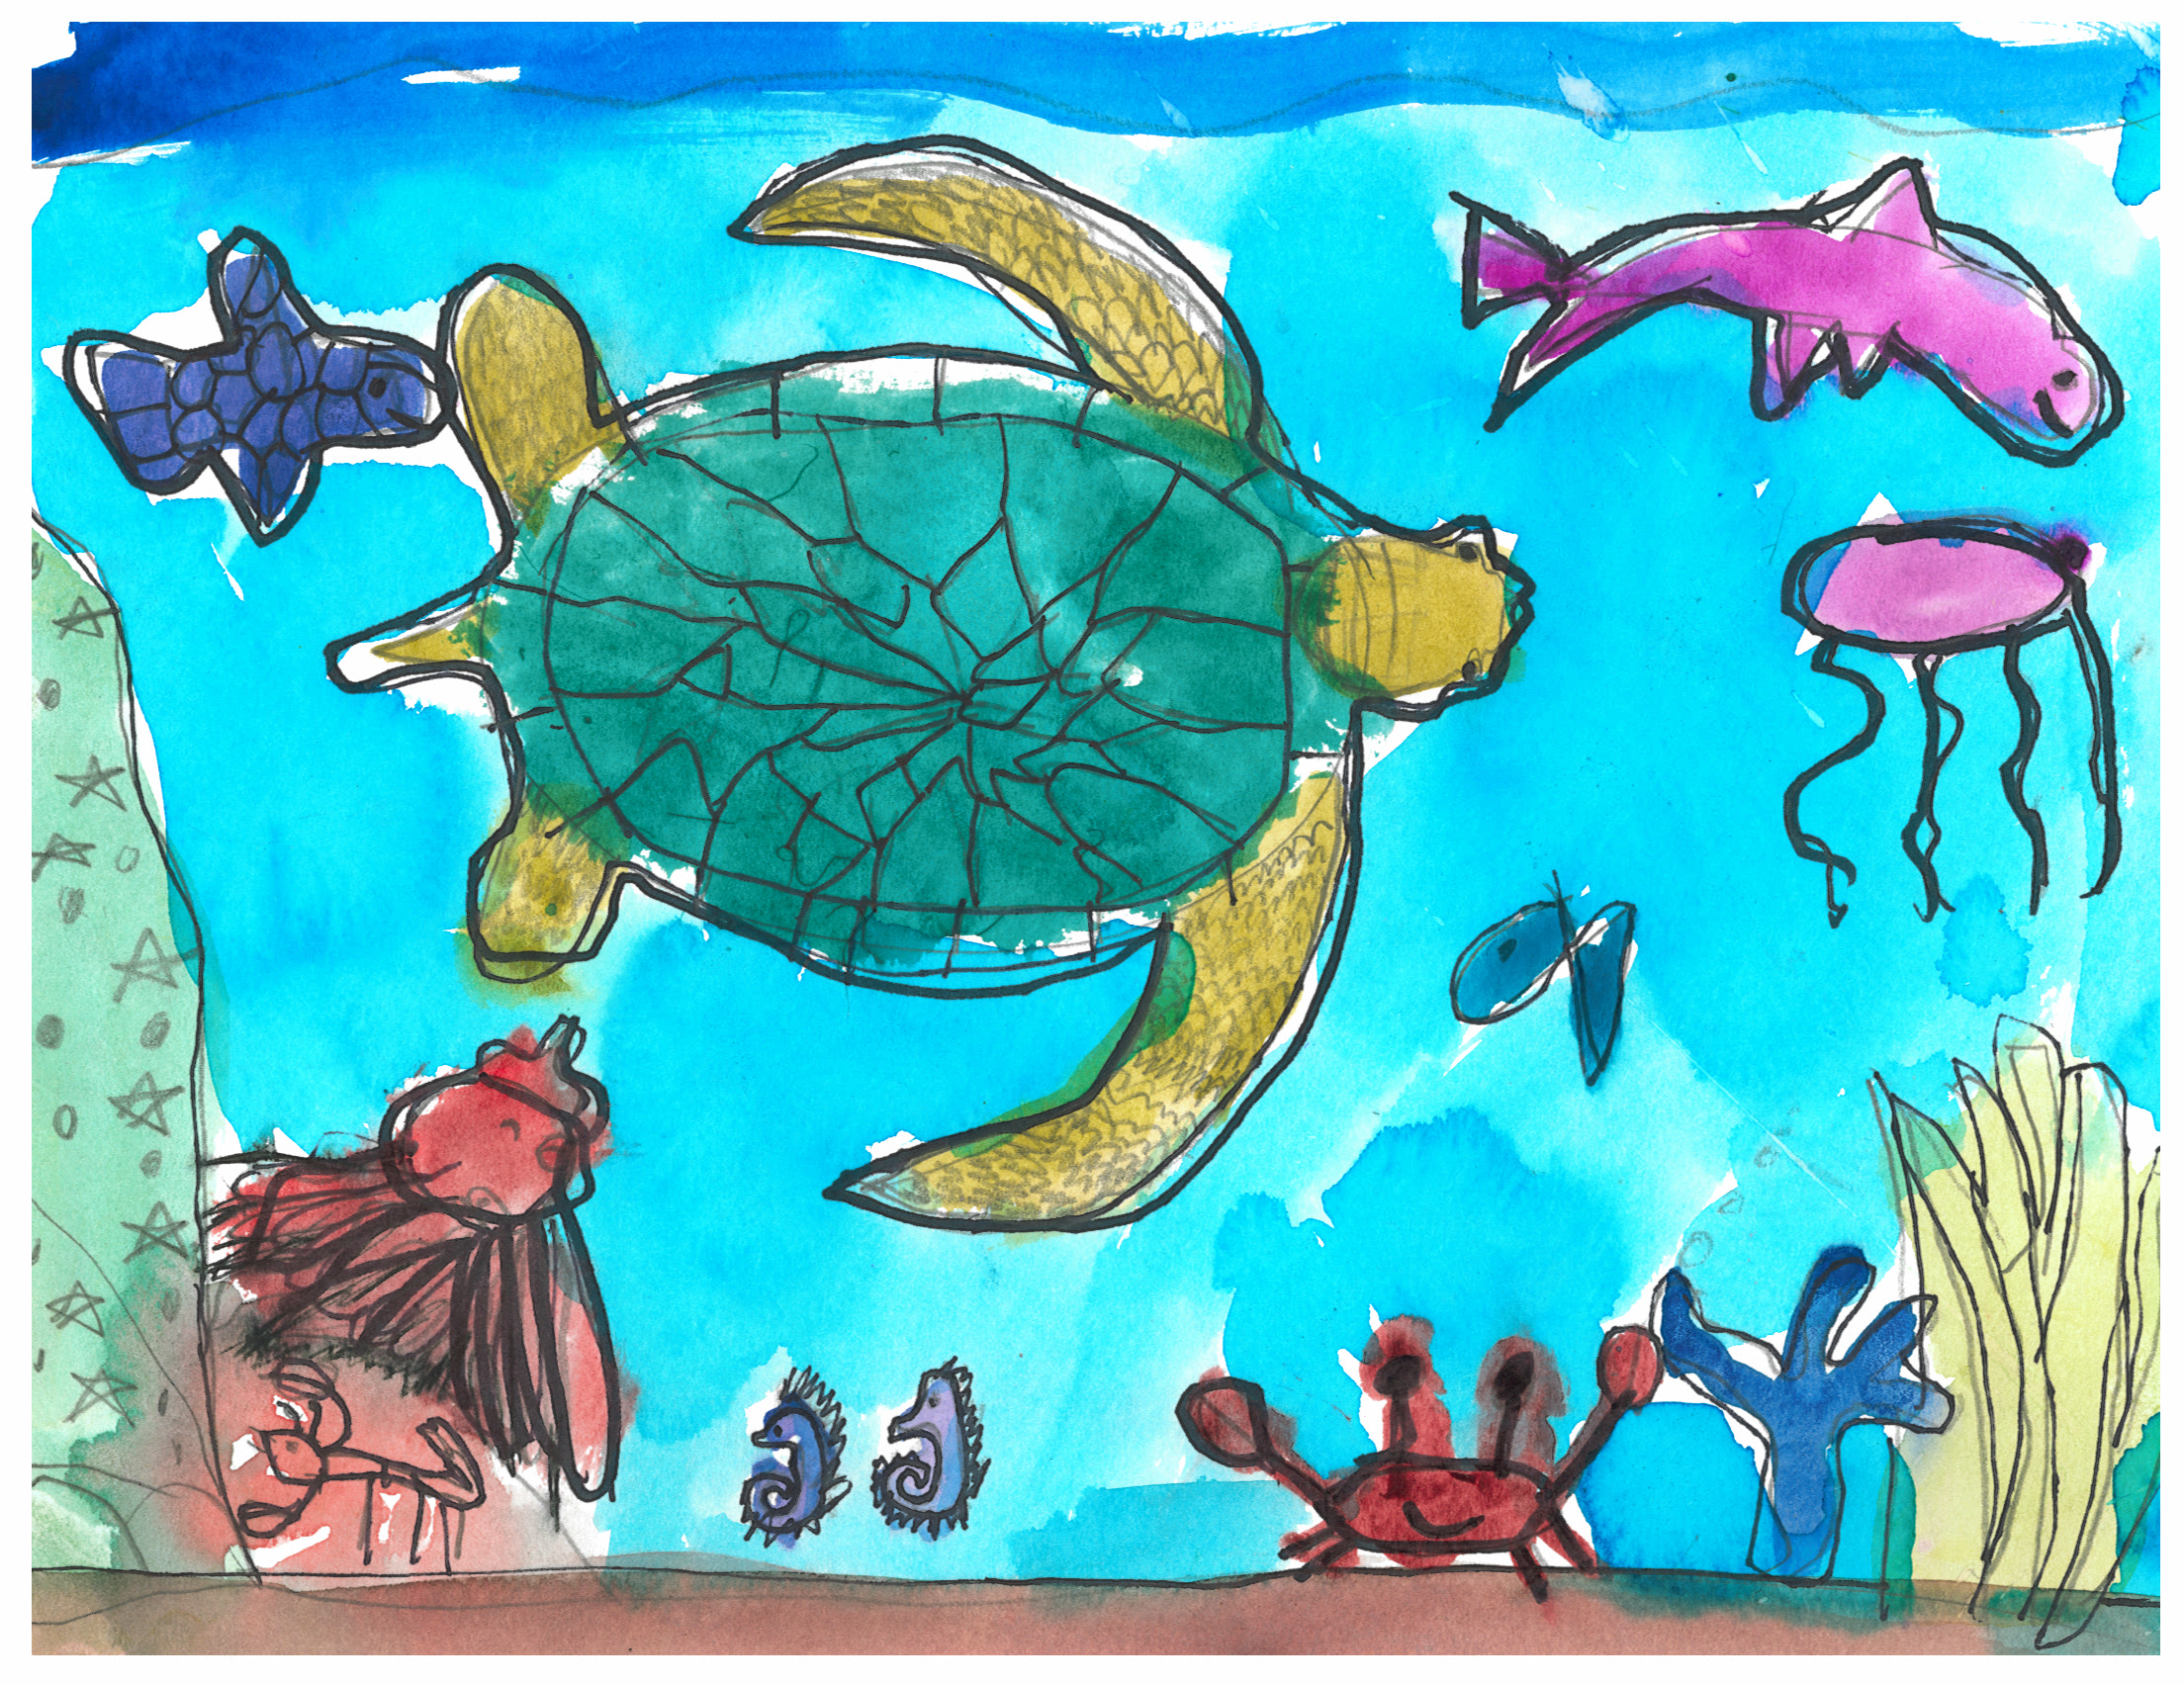 NOAA Fisheries’ Marine Endangered Species Art Contest winner, first grade: Turtle, by Maia U.